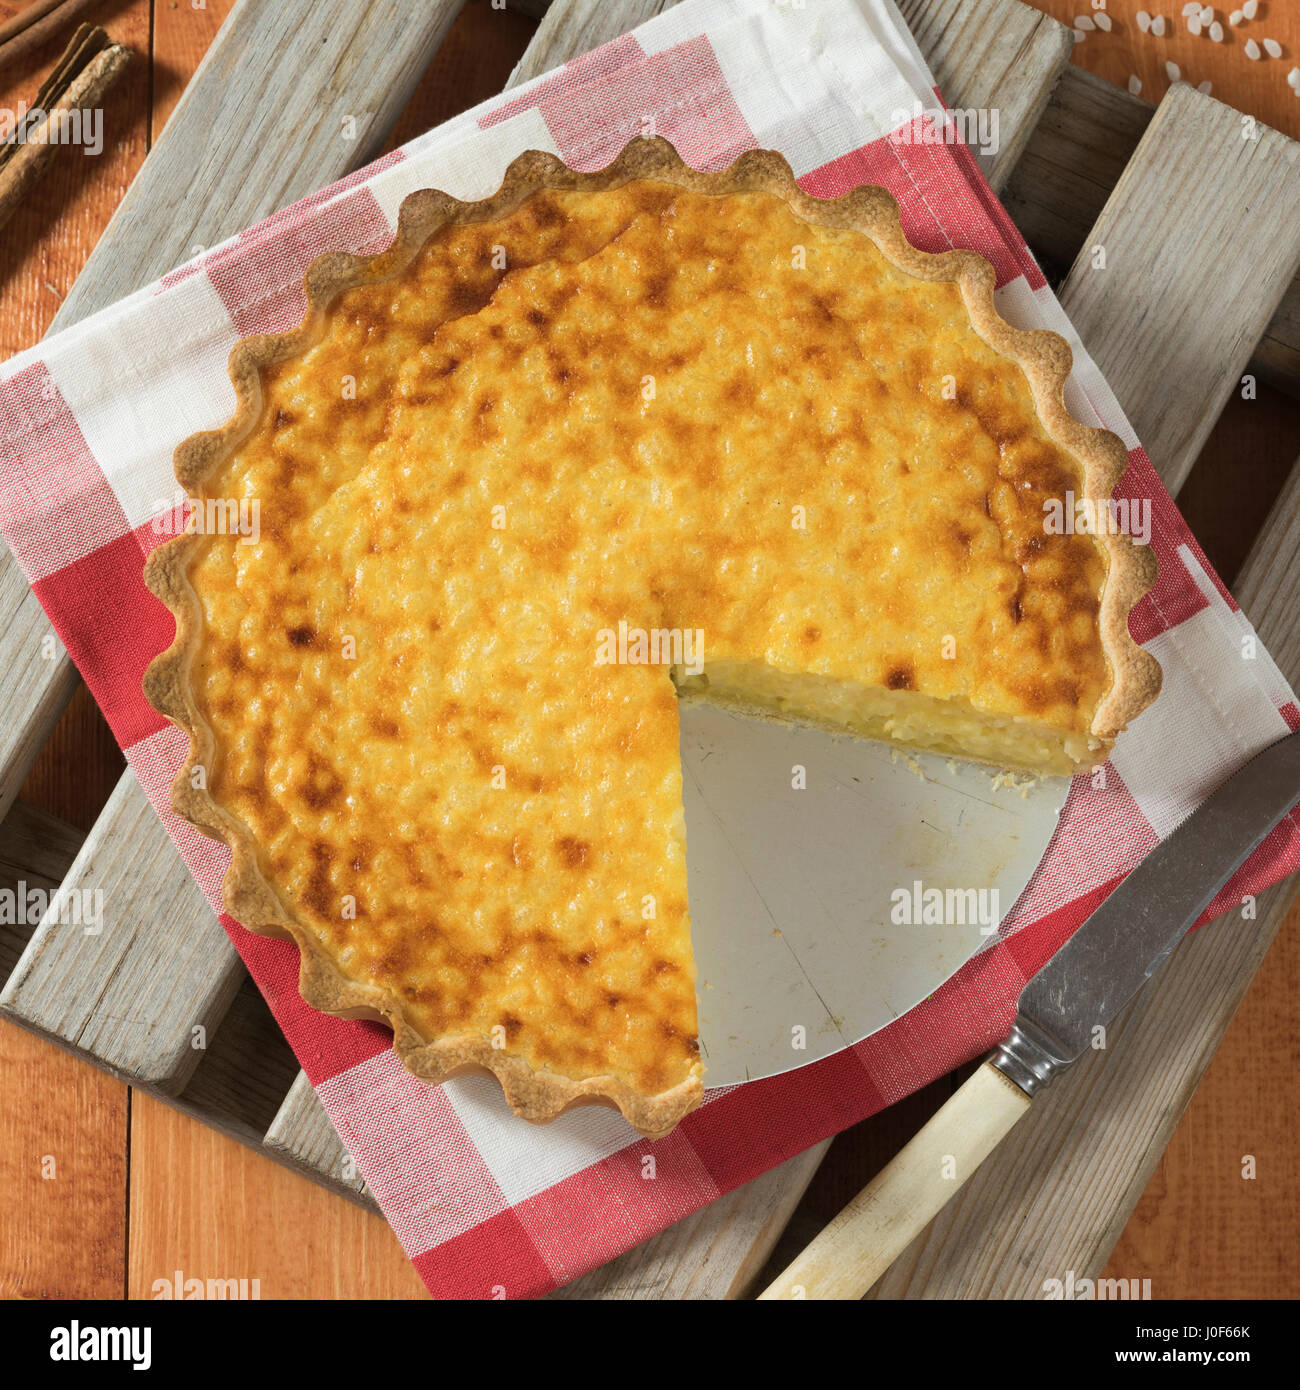 Rijsttaart. Belga torta di riso. Belgio Paesi Bassi cibo Foto stock - Alamy